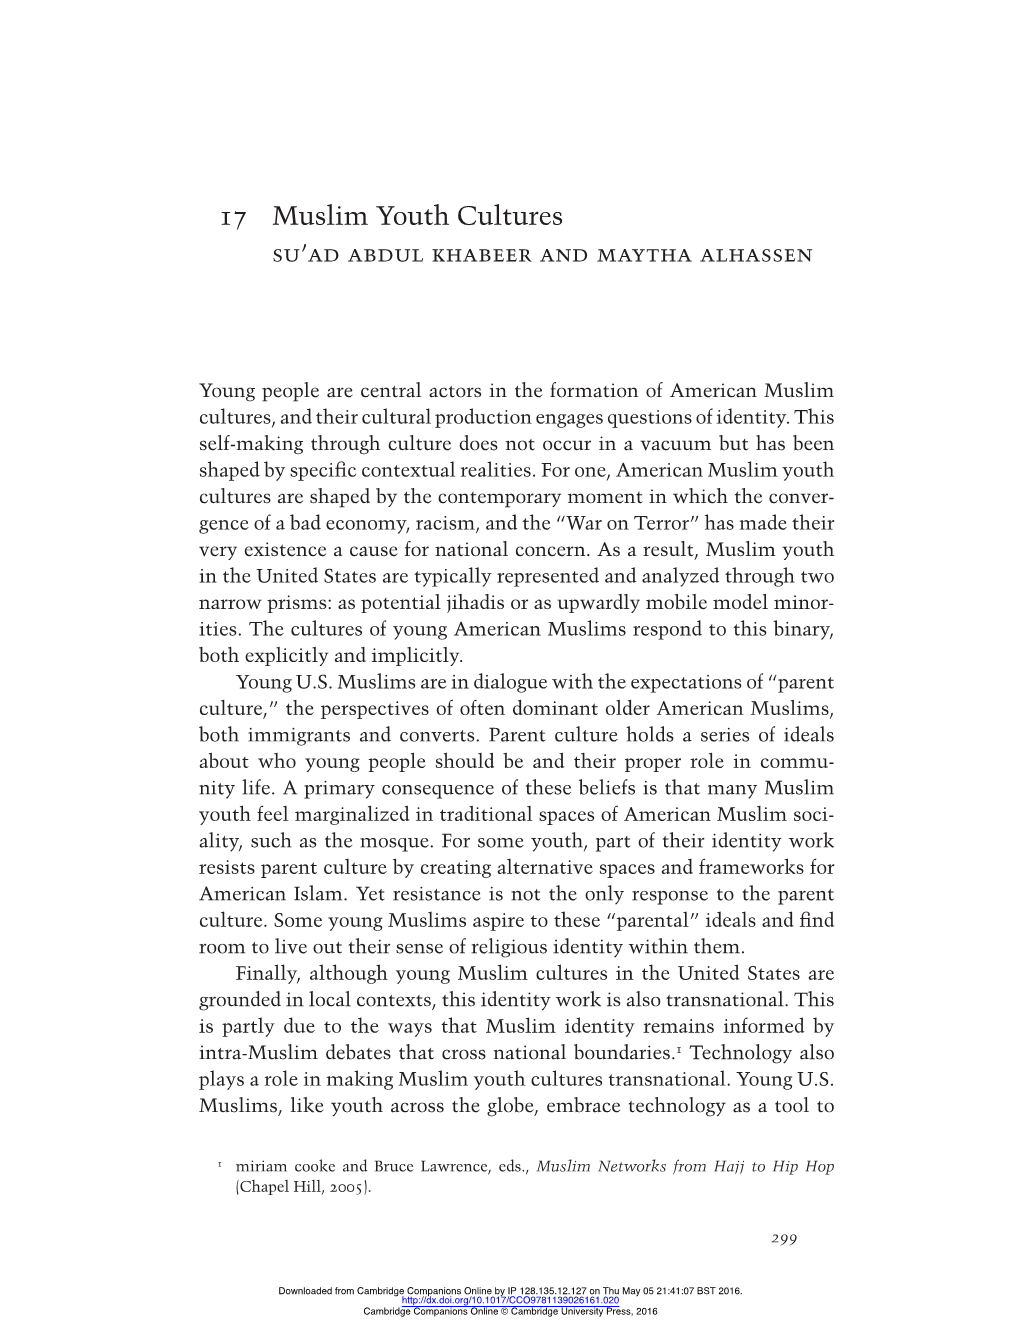 17 Muslim Youth Cultures Su’Ad Abdul Khabeer and Maytha Alhassen